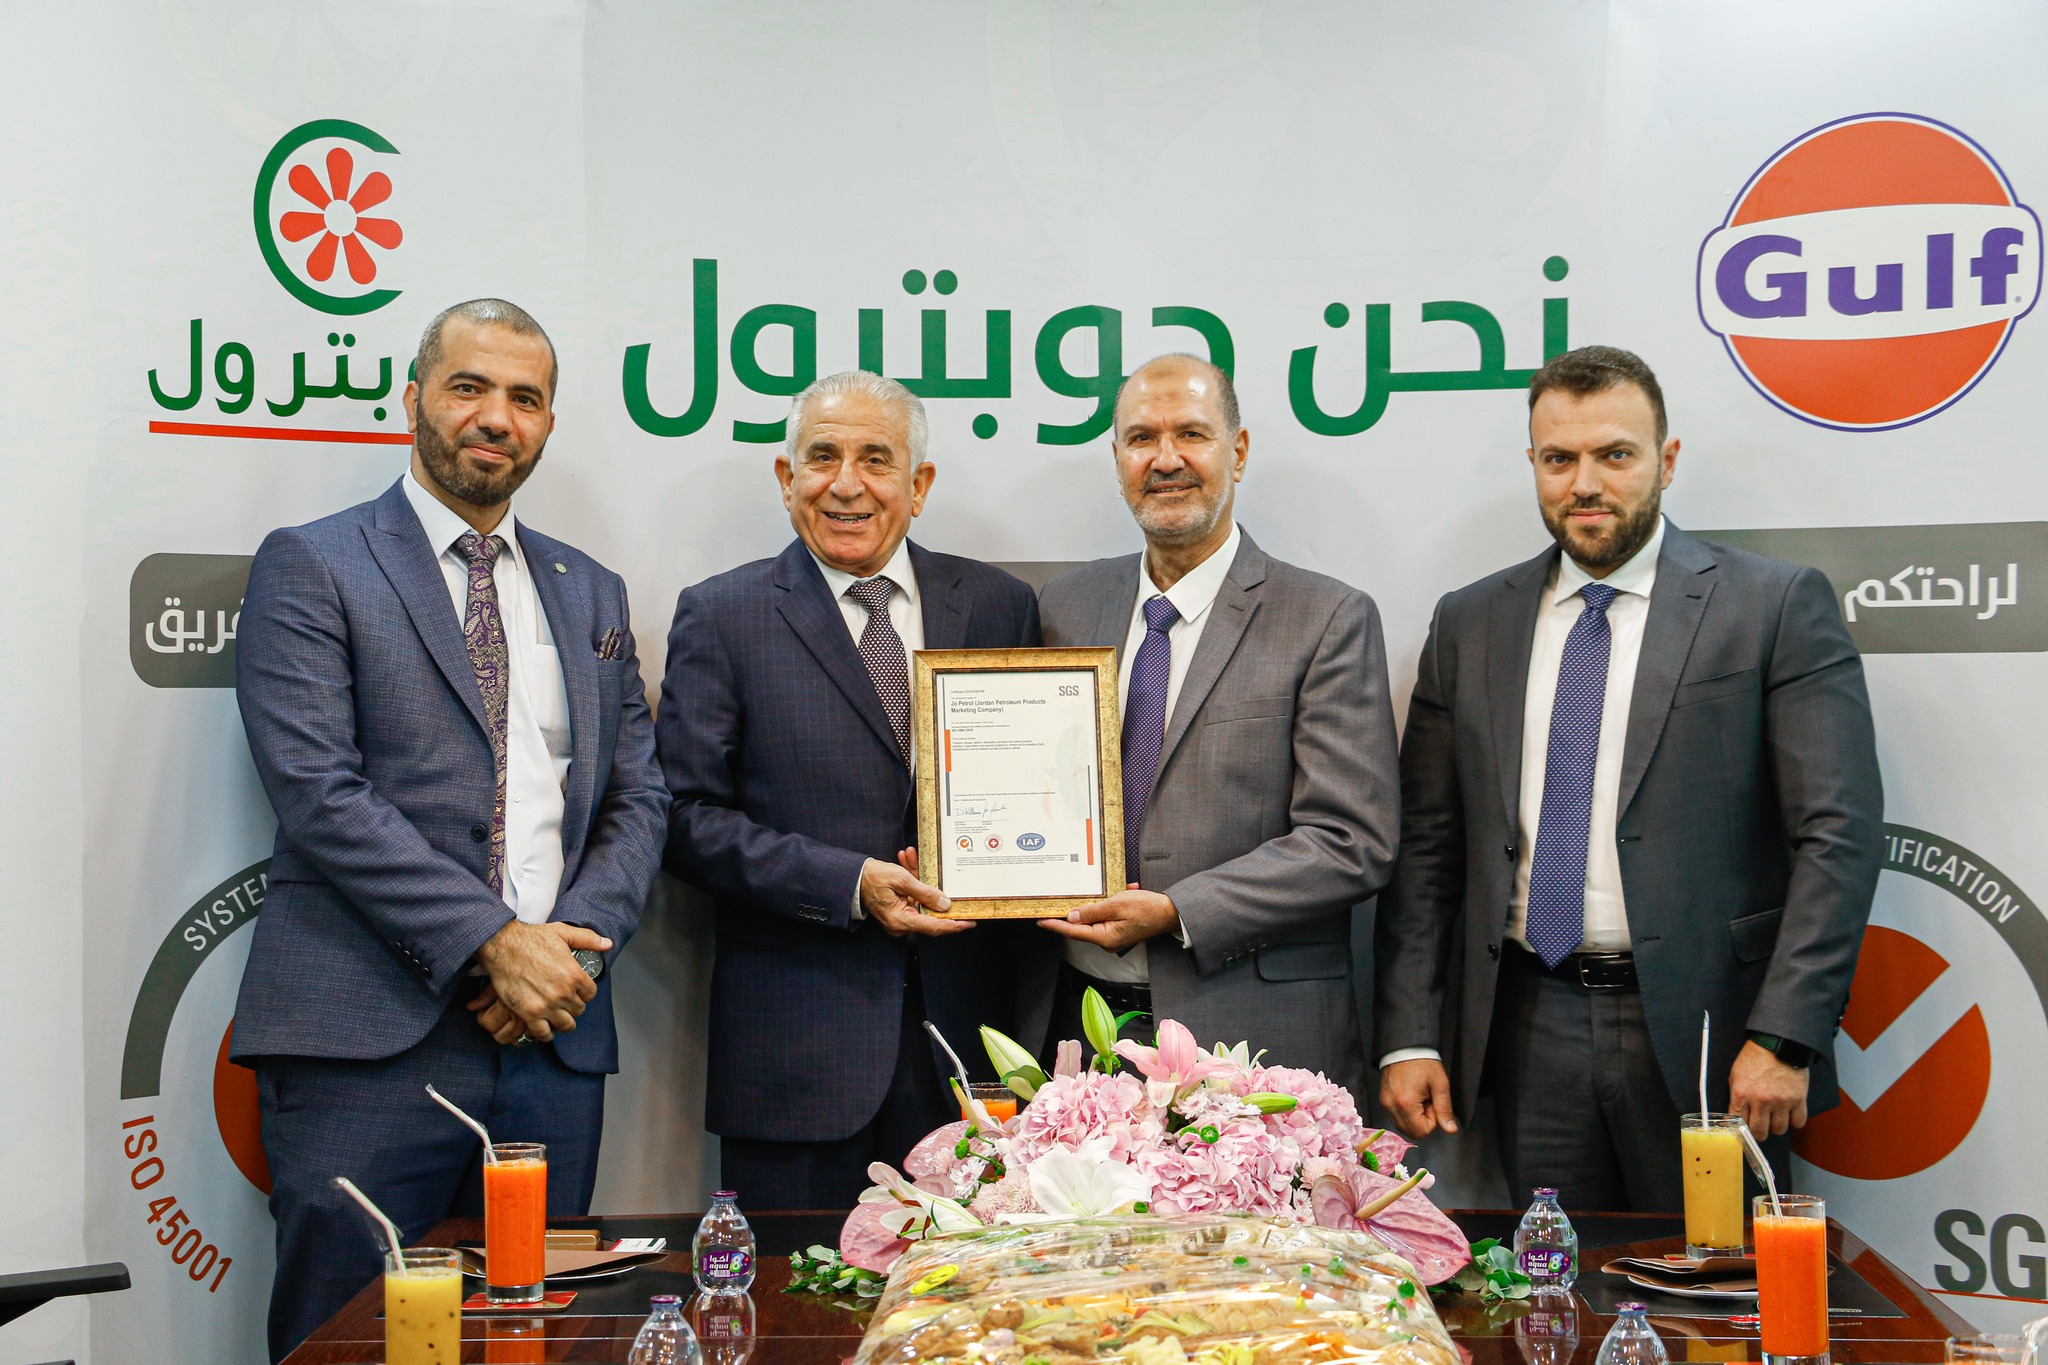 Partnership between Jopetrol bp and Masdar